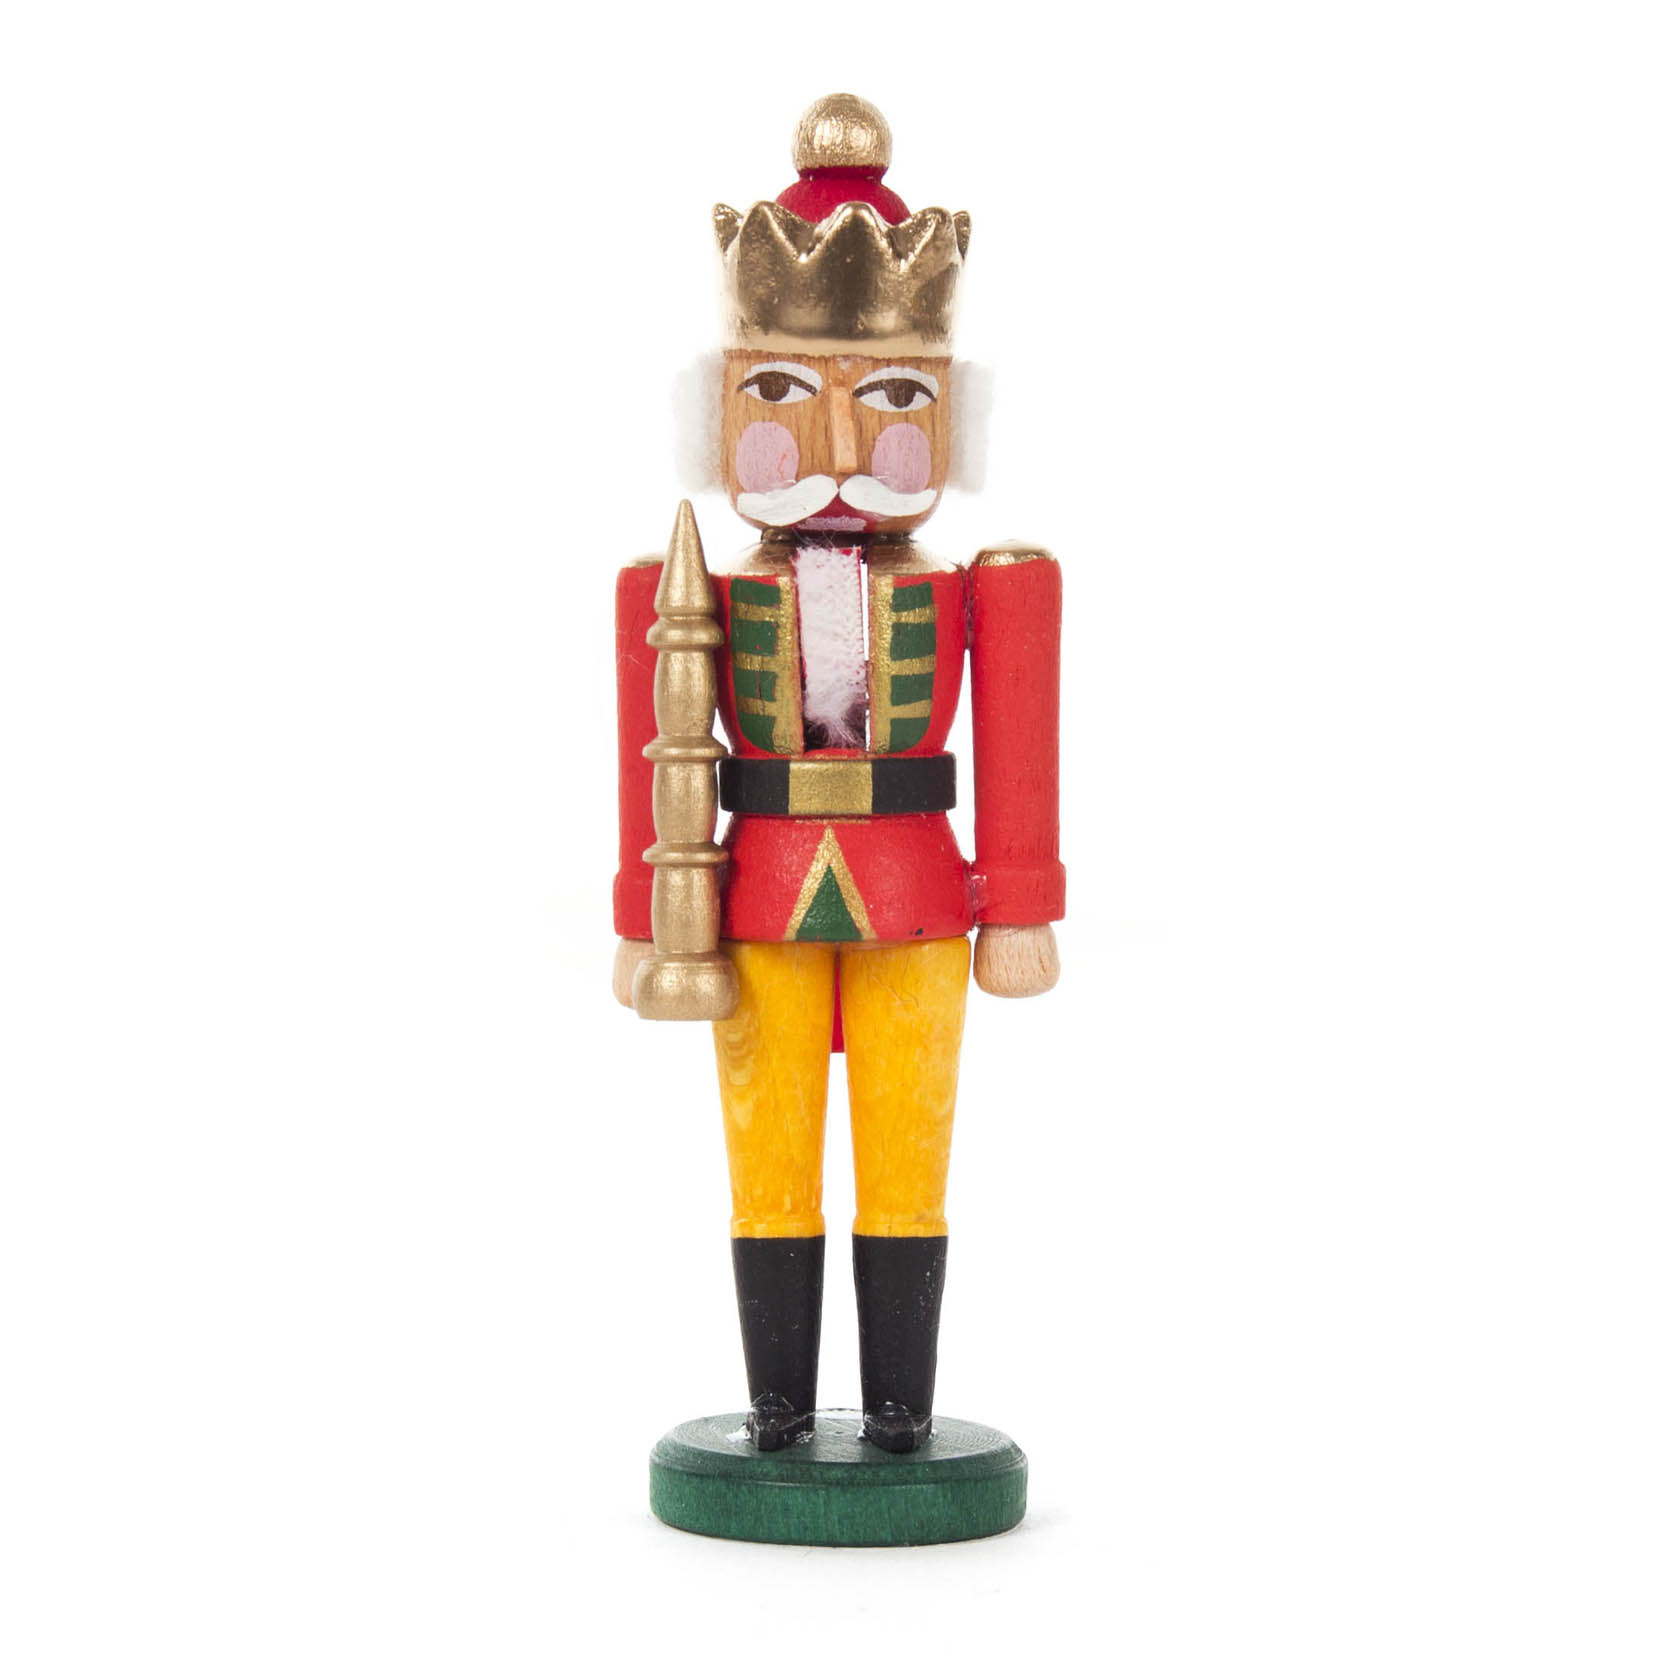 Mini-Nussknacker König rot-gelb, 8cm im Dregeno Online Shop günstig kaufen